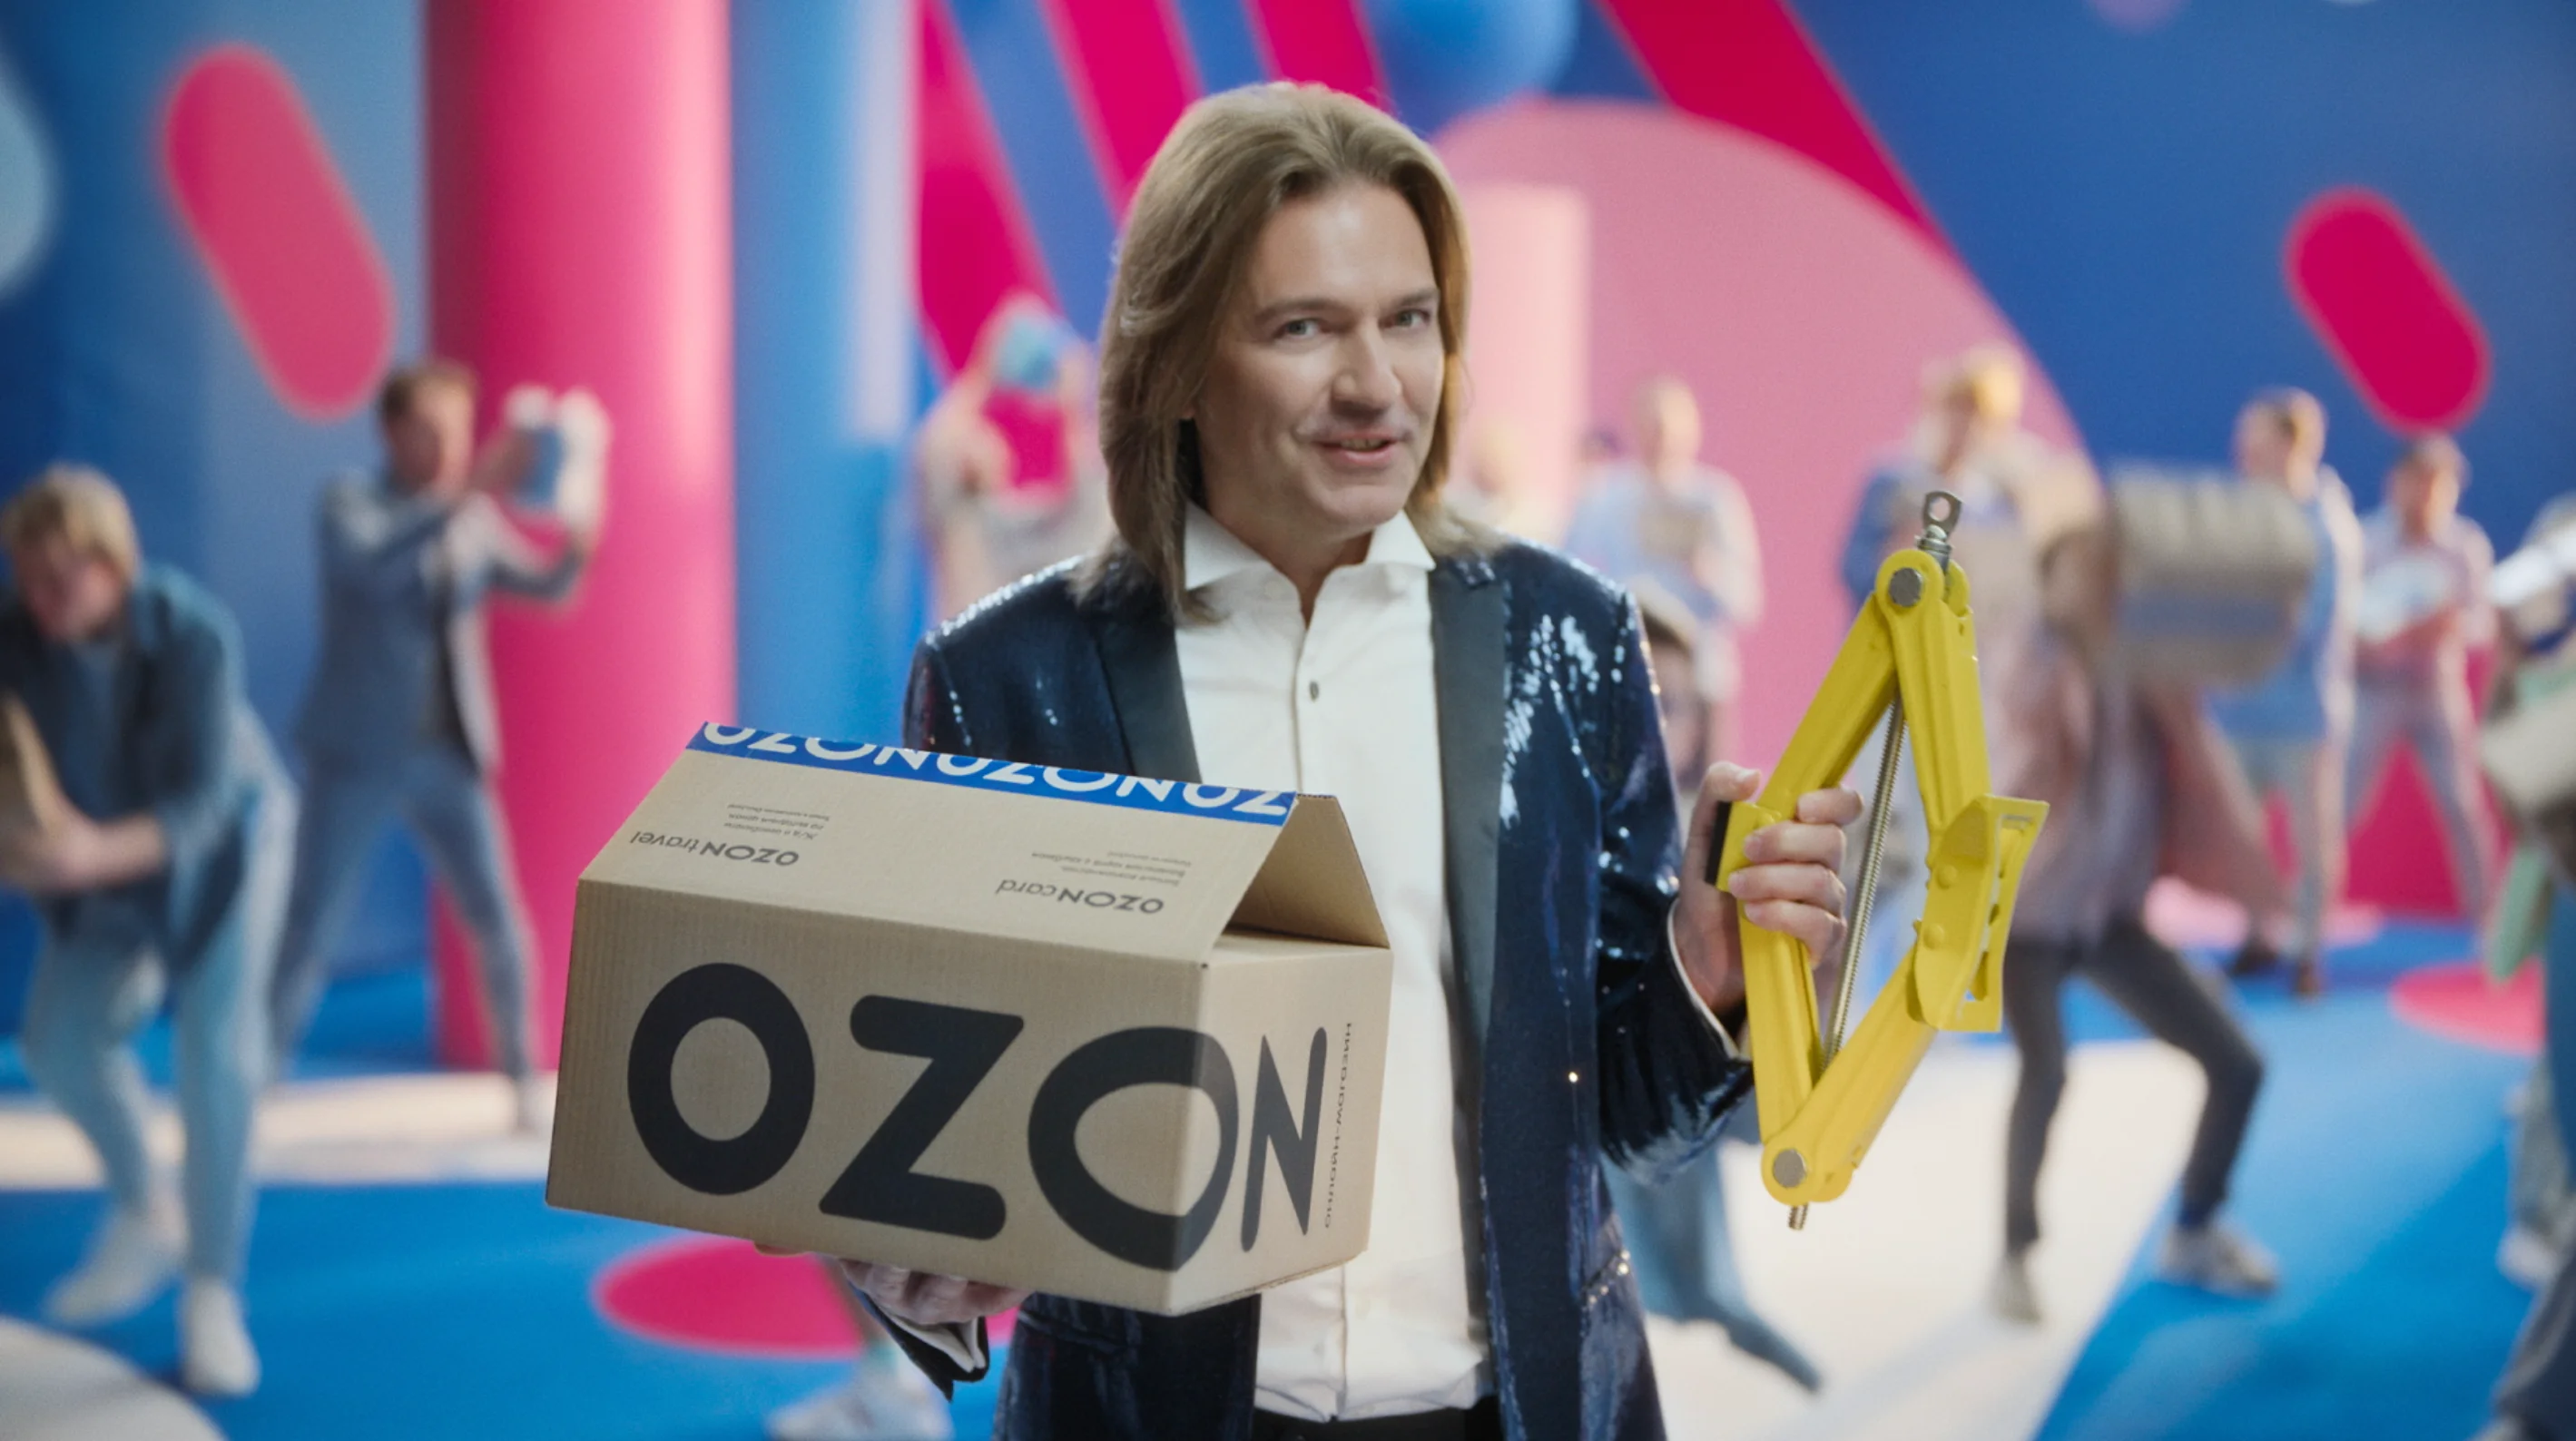 Реклама озон руки загребуки. Девушка из рекламы Озон.